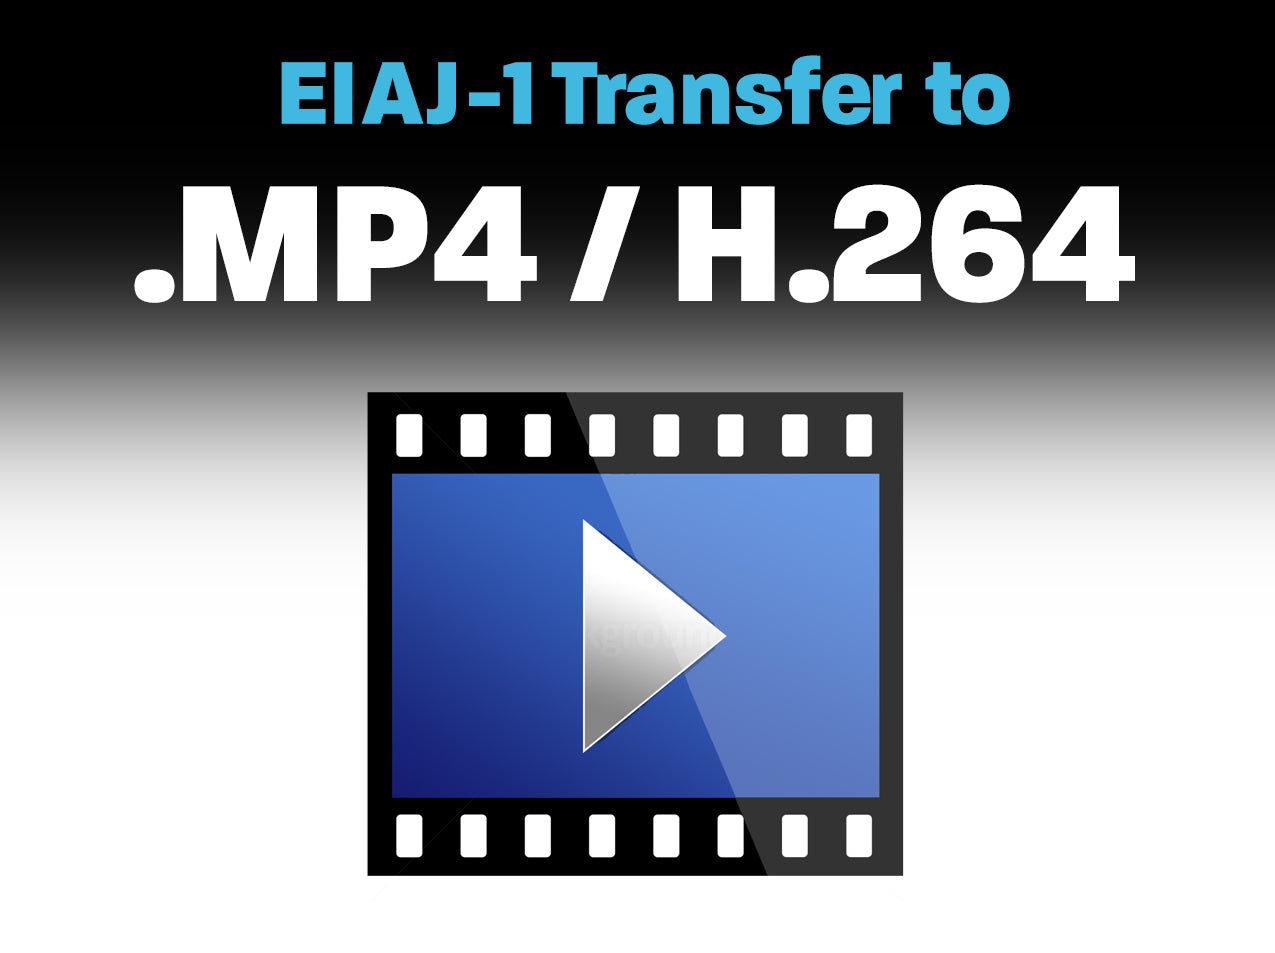 EIAJ-1 B&W or Color to .MP4 / H.264